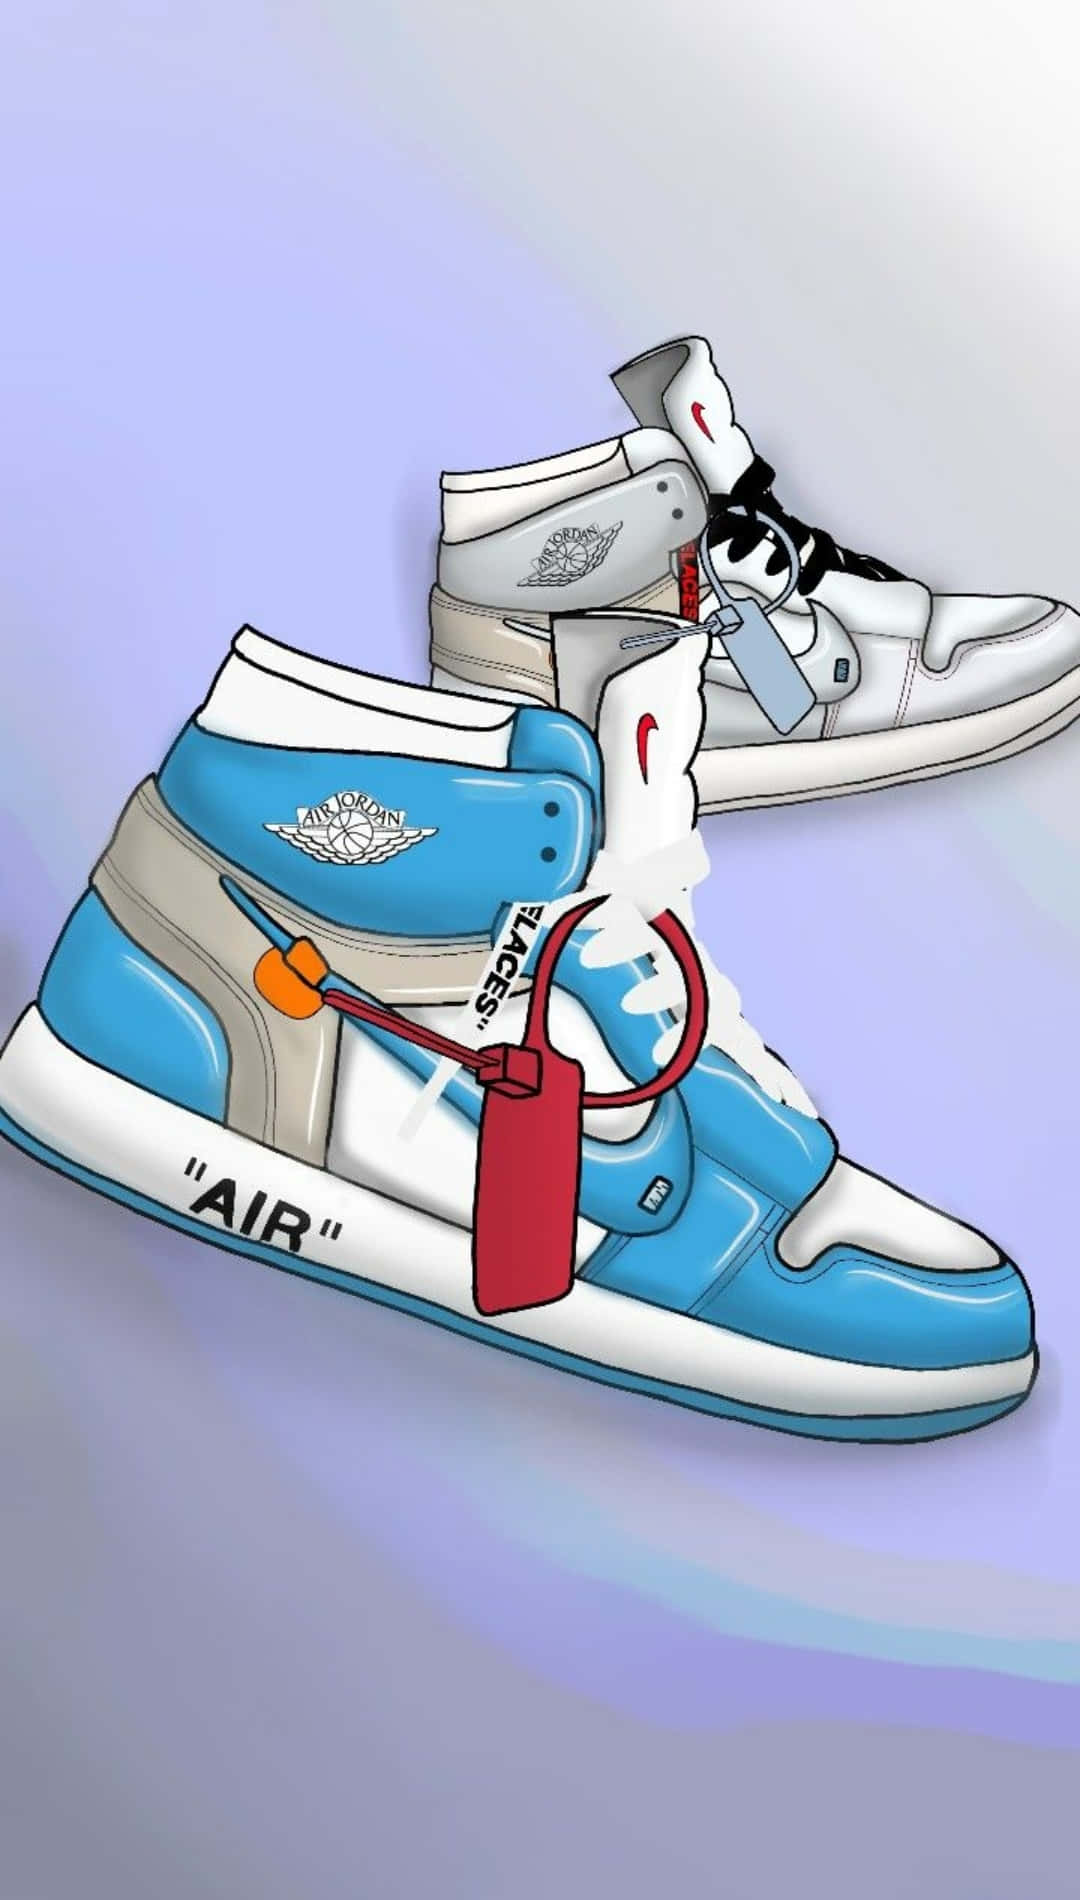 Stylish Blue Sneakers Illustration Wallpaper